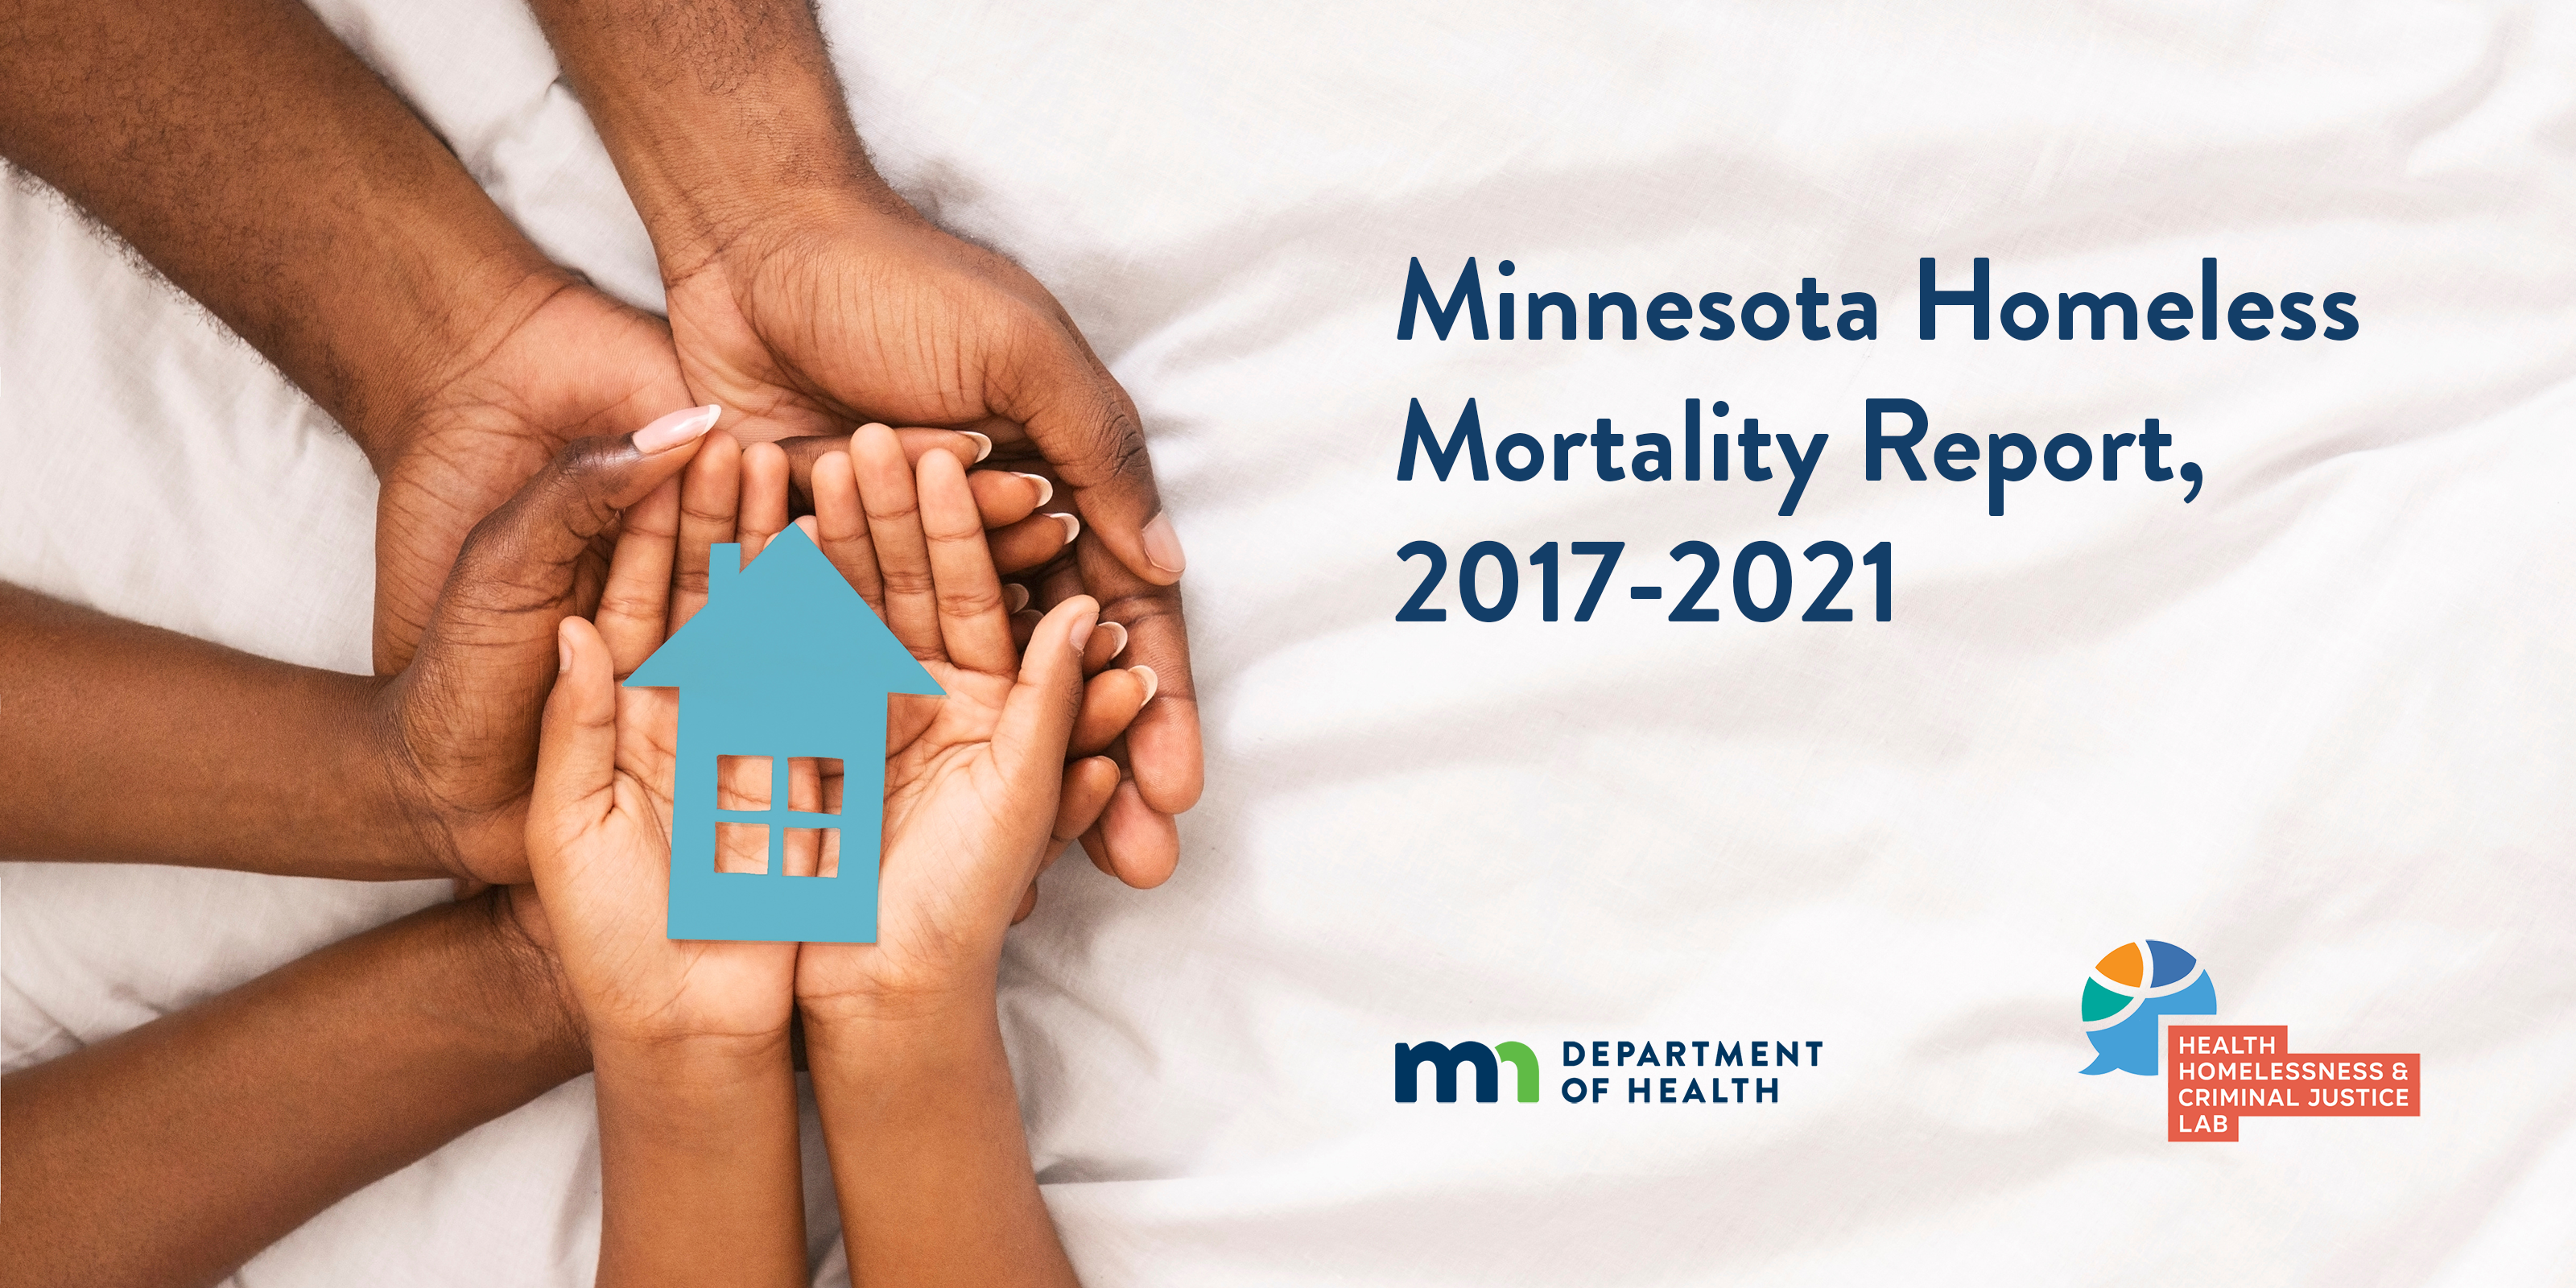 Minnesota Homeless Mortality Report, 2017-2021